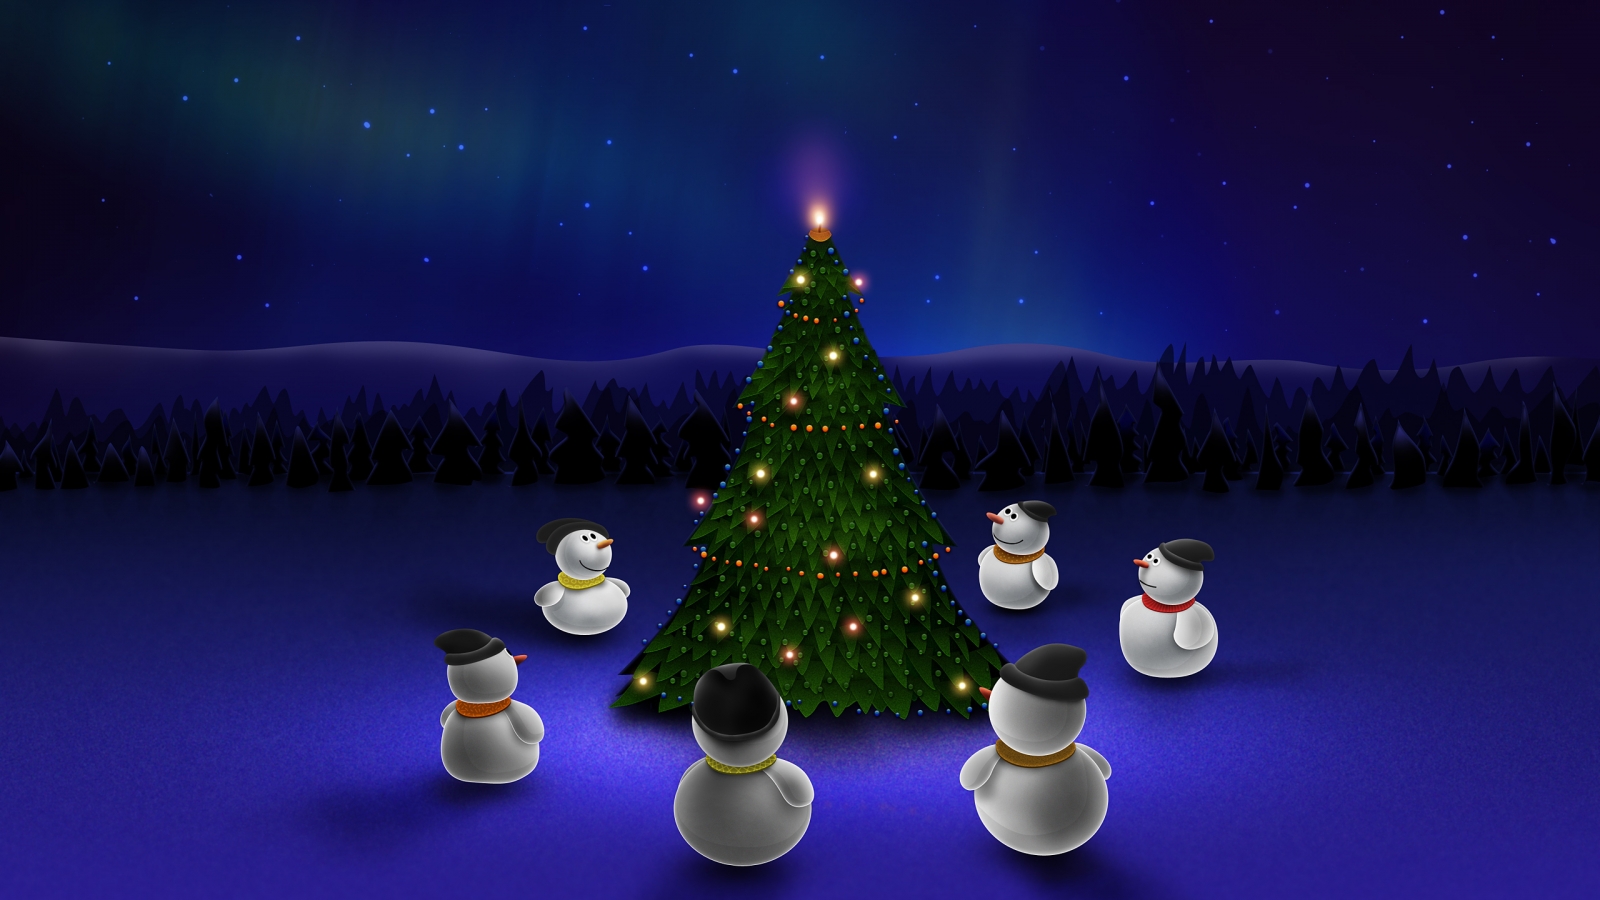 Snowman Around Christmas Tree for 1600 x 900 HDTV resolution